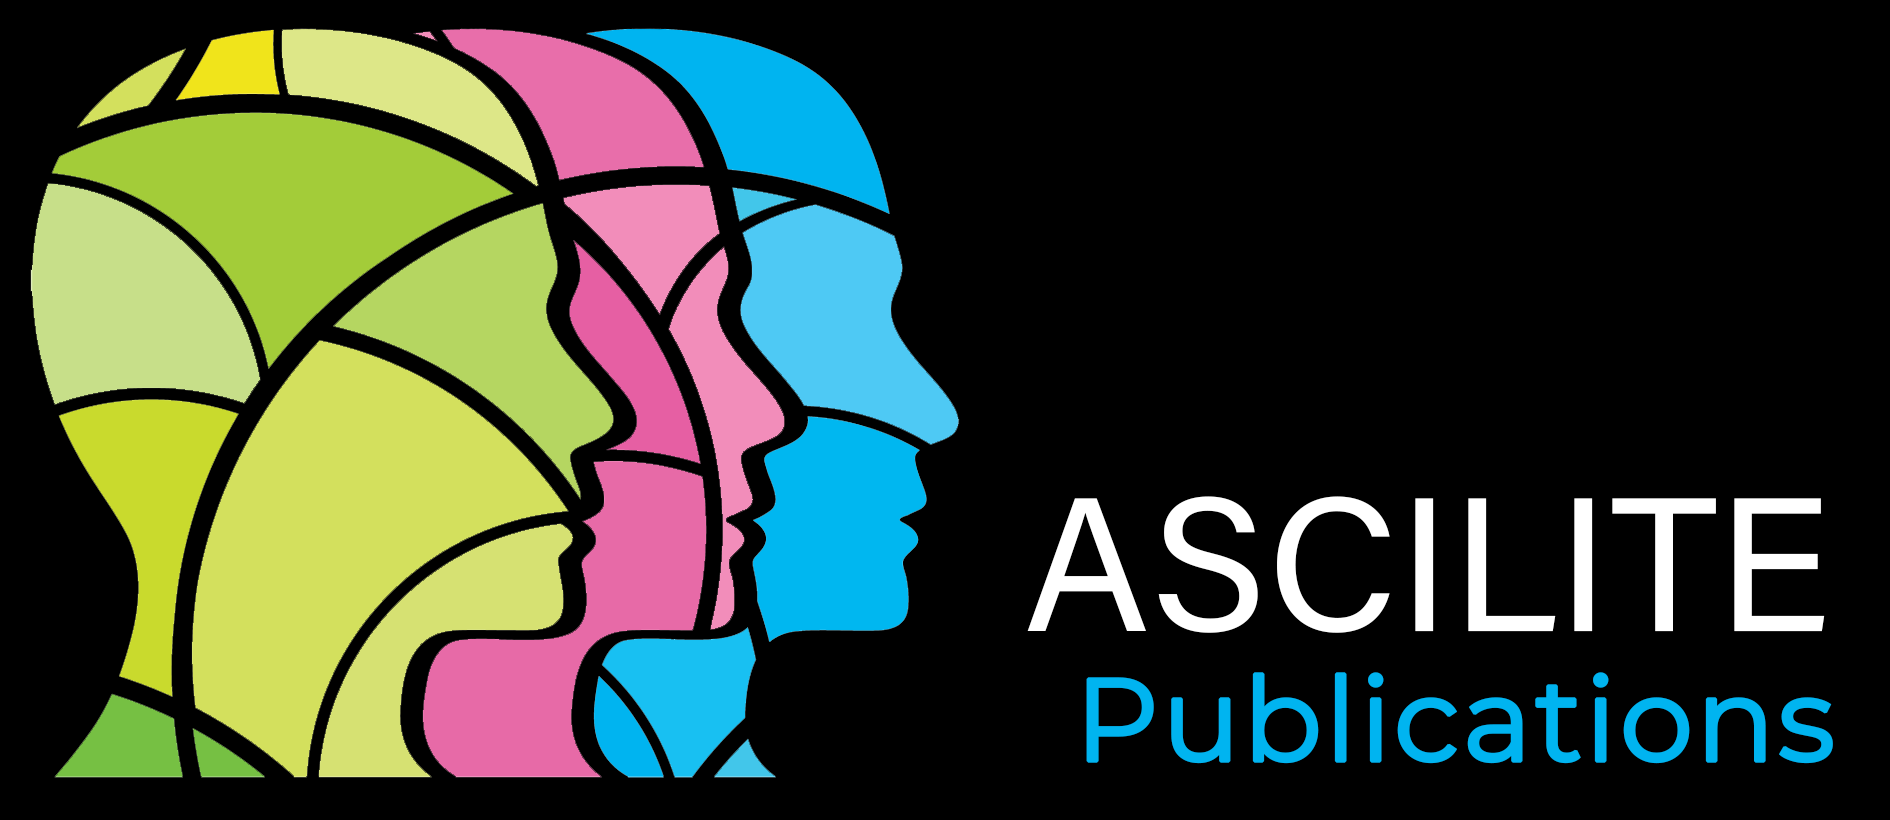 ASCILITE Publications logo